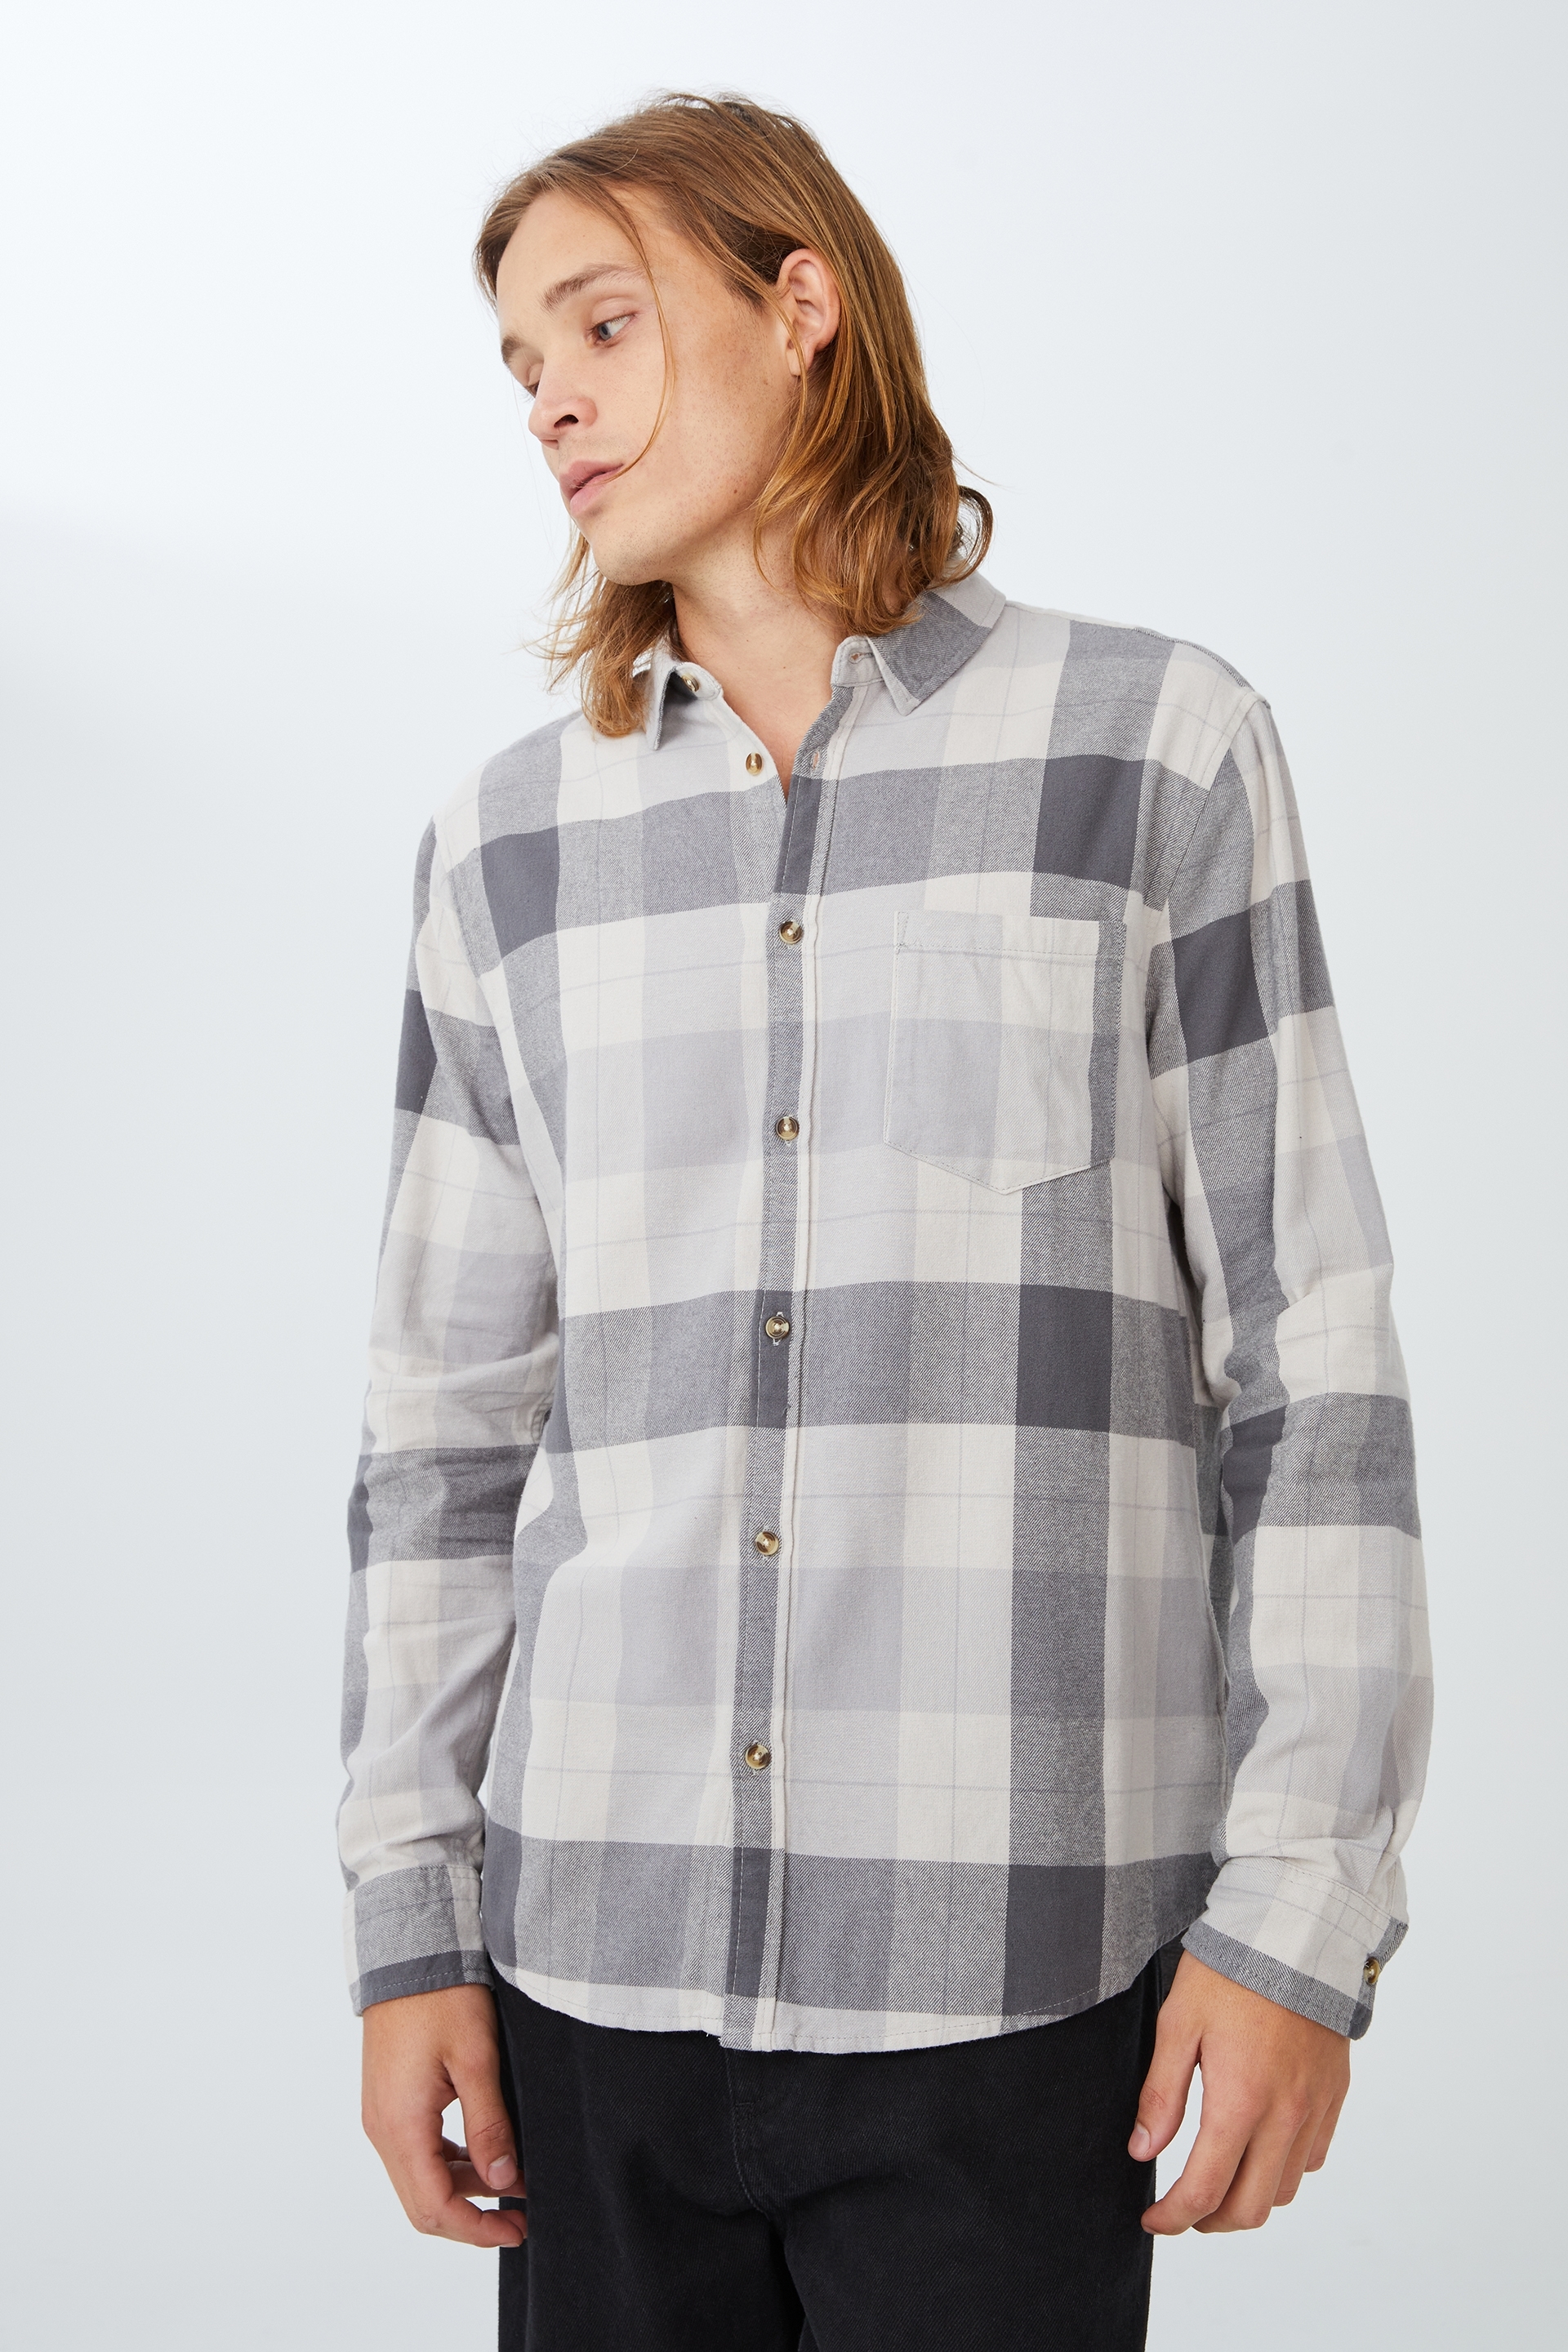 Cotton On Men - Camden Long Sleeve Shirt - Faded charcoal check